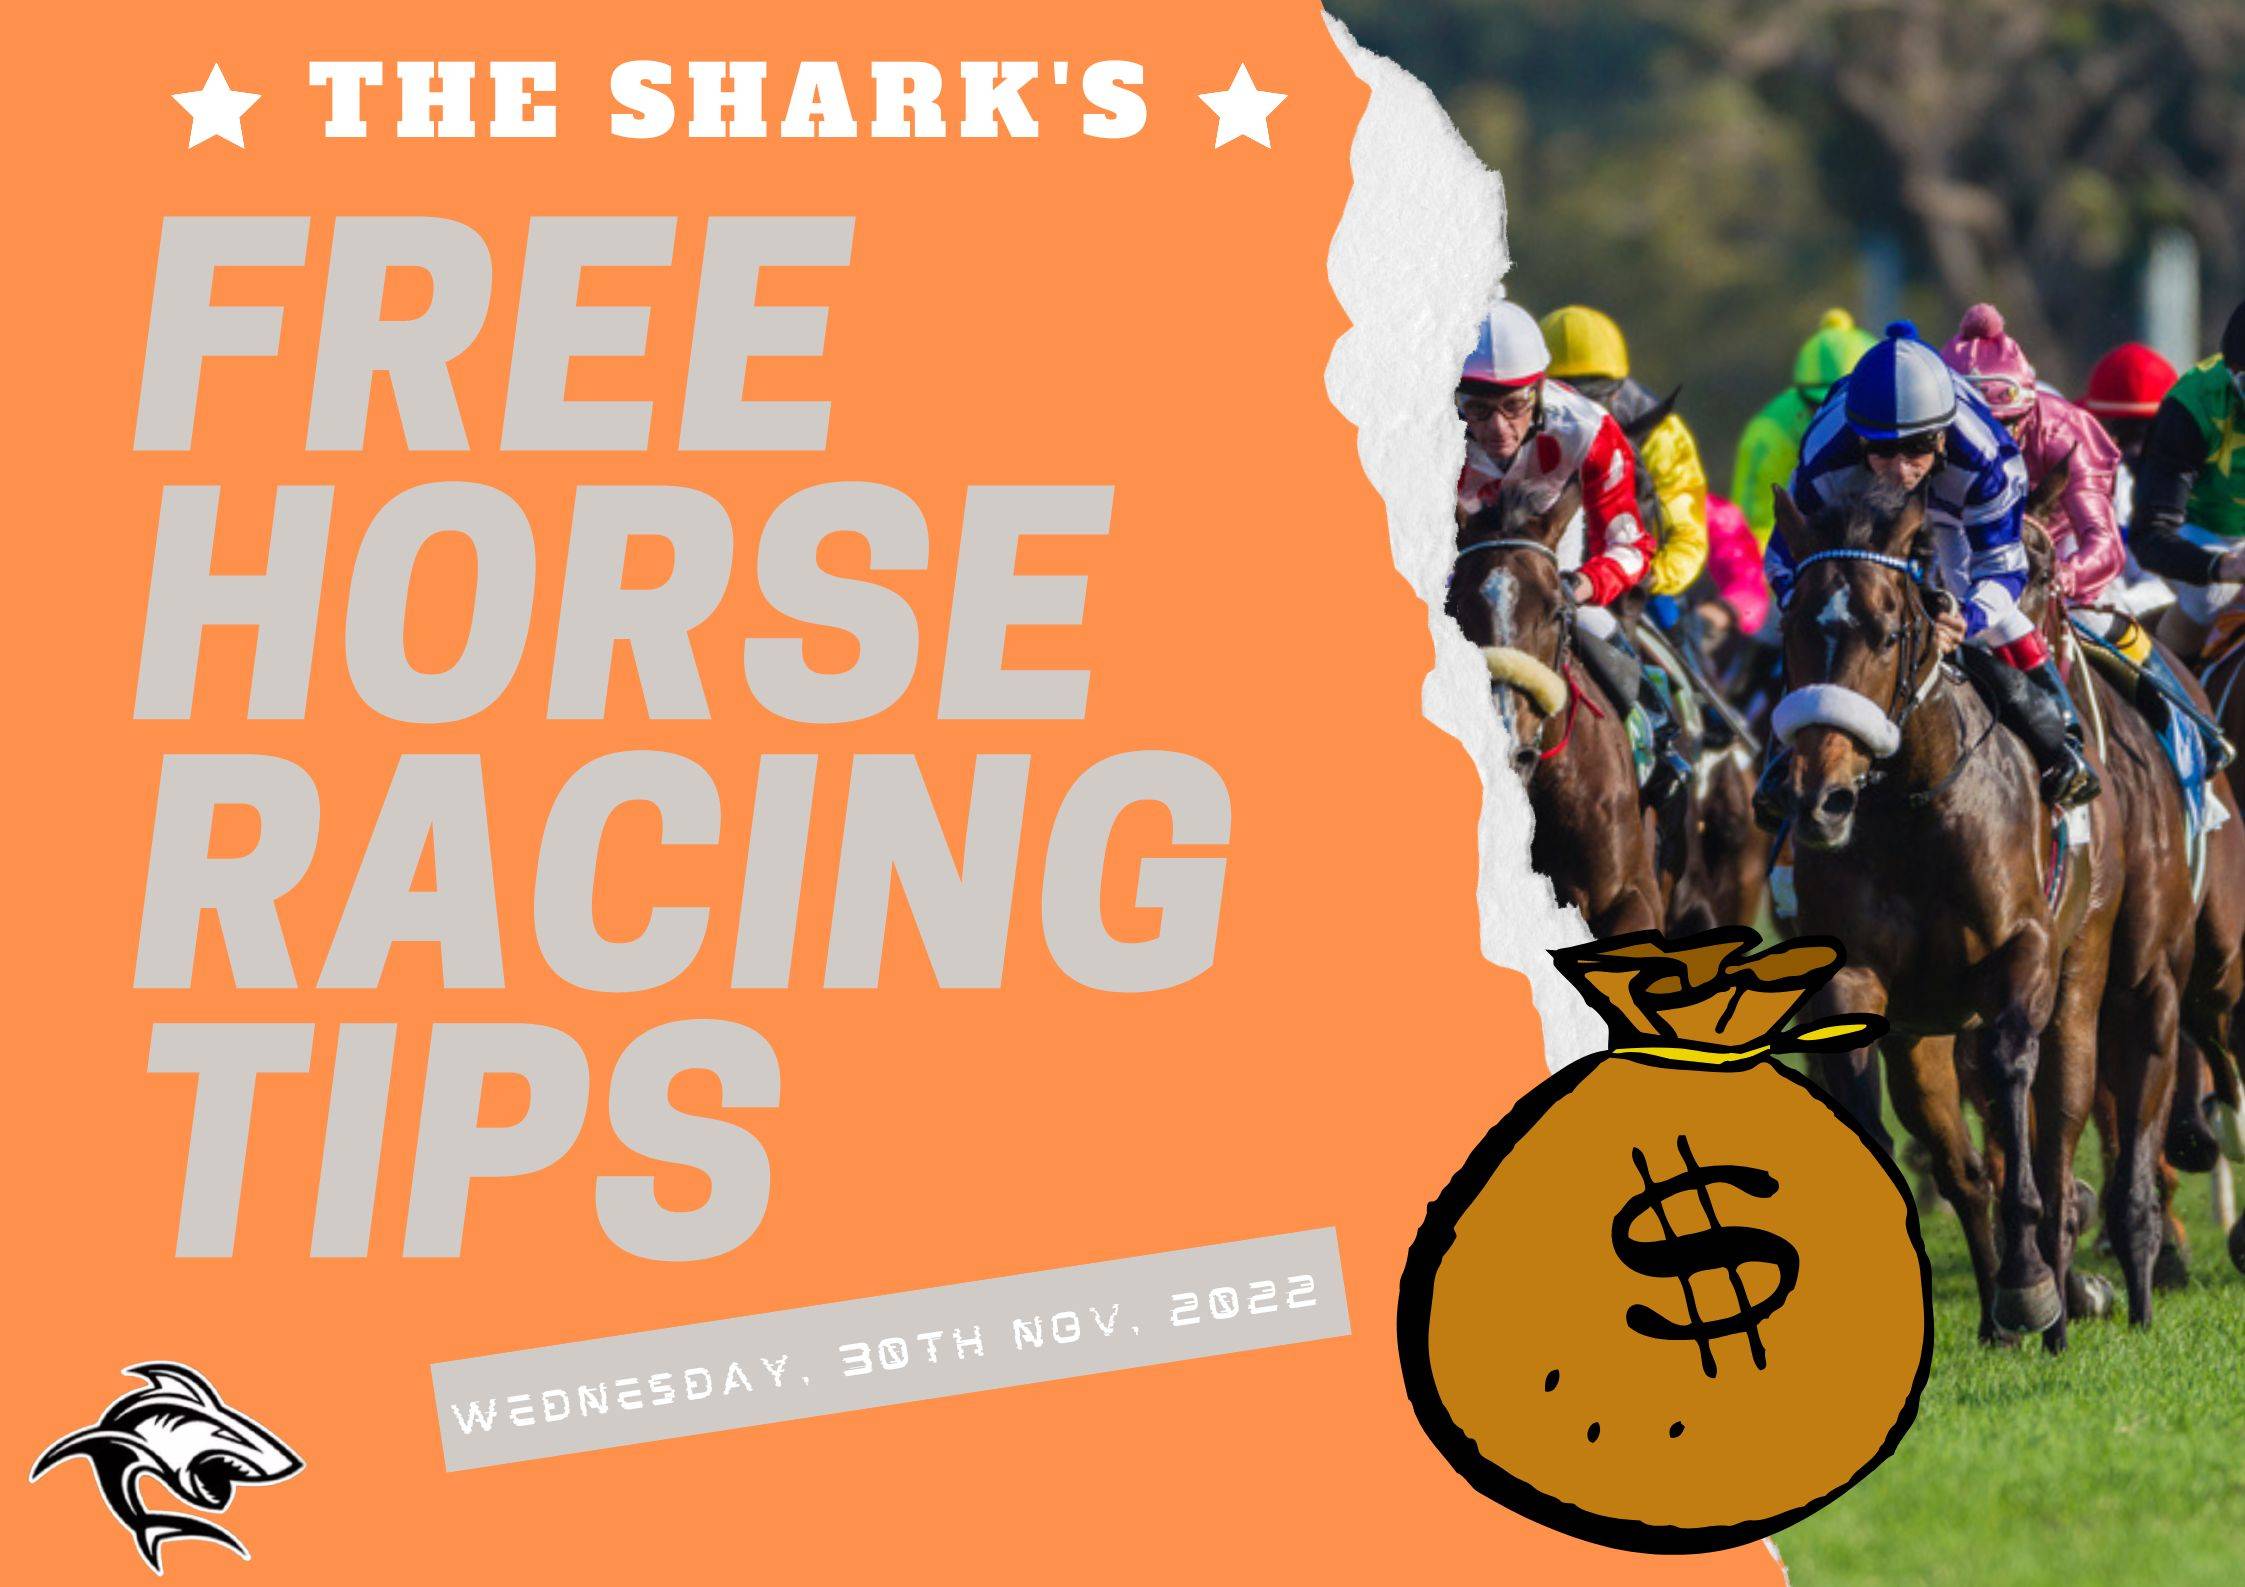 Free Horse Racing Tips - 30th Nov